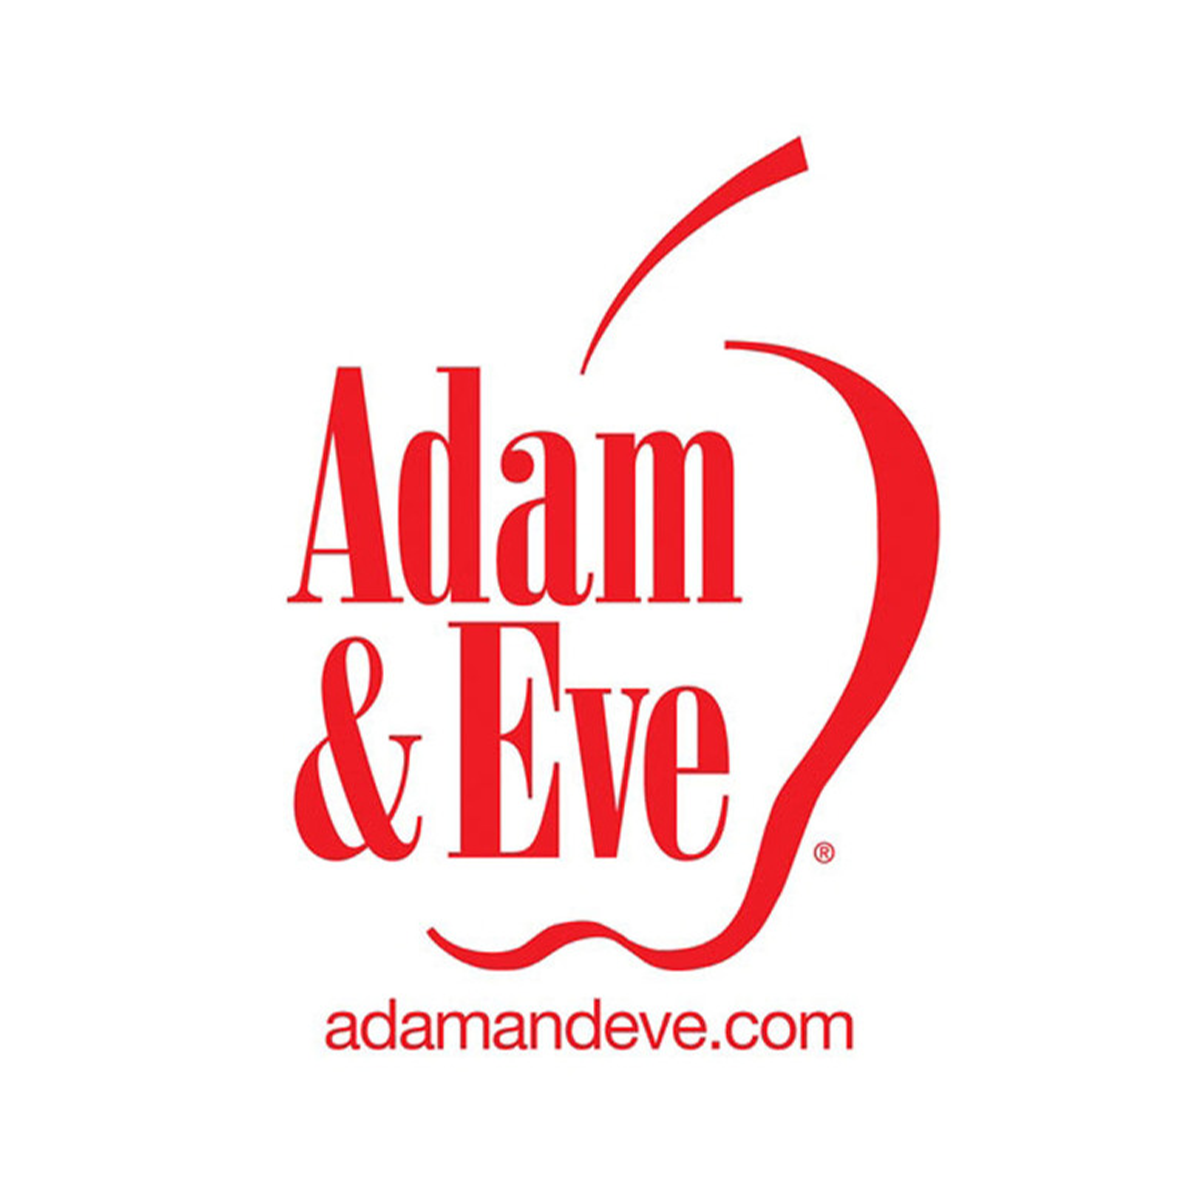 adam and eve logo